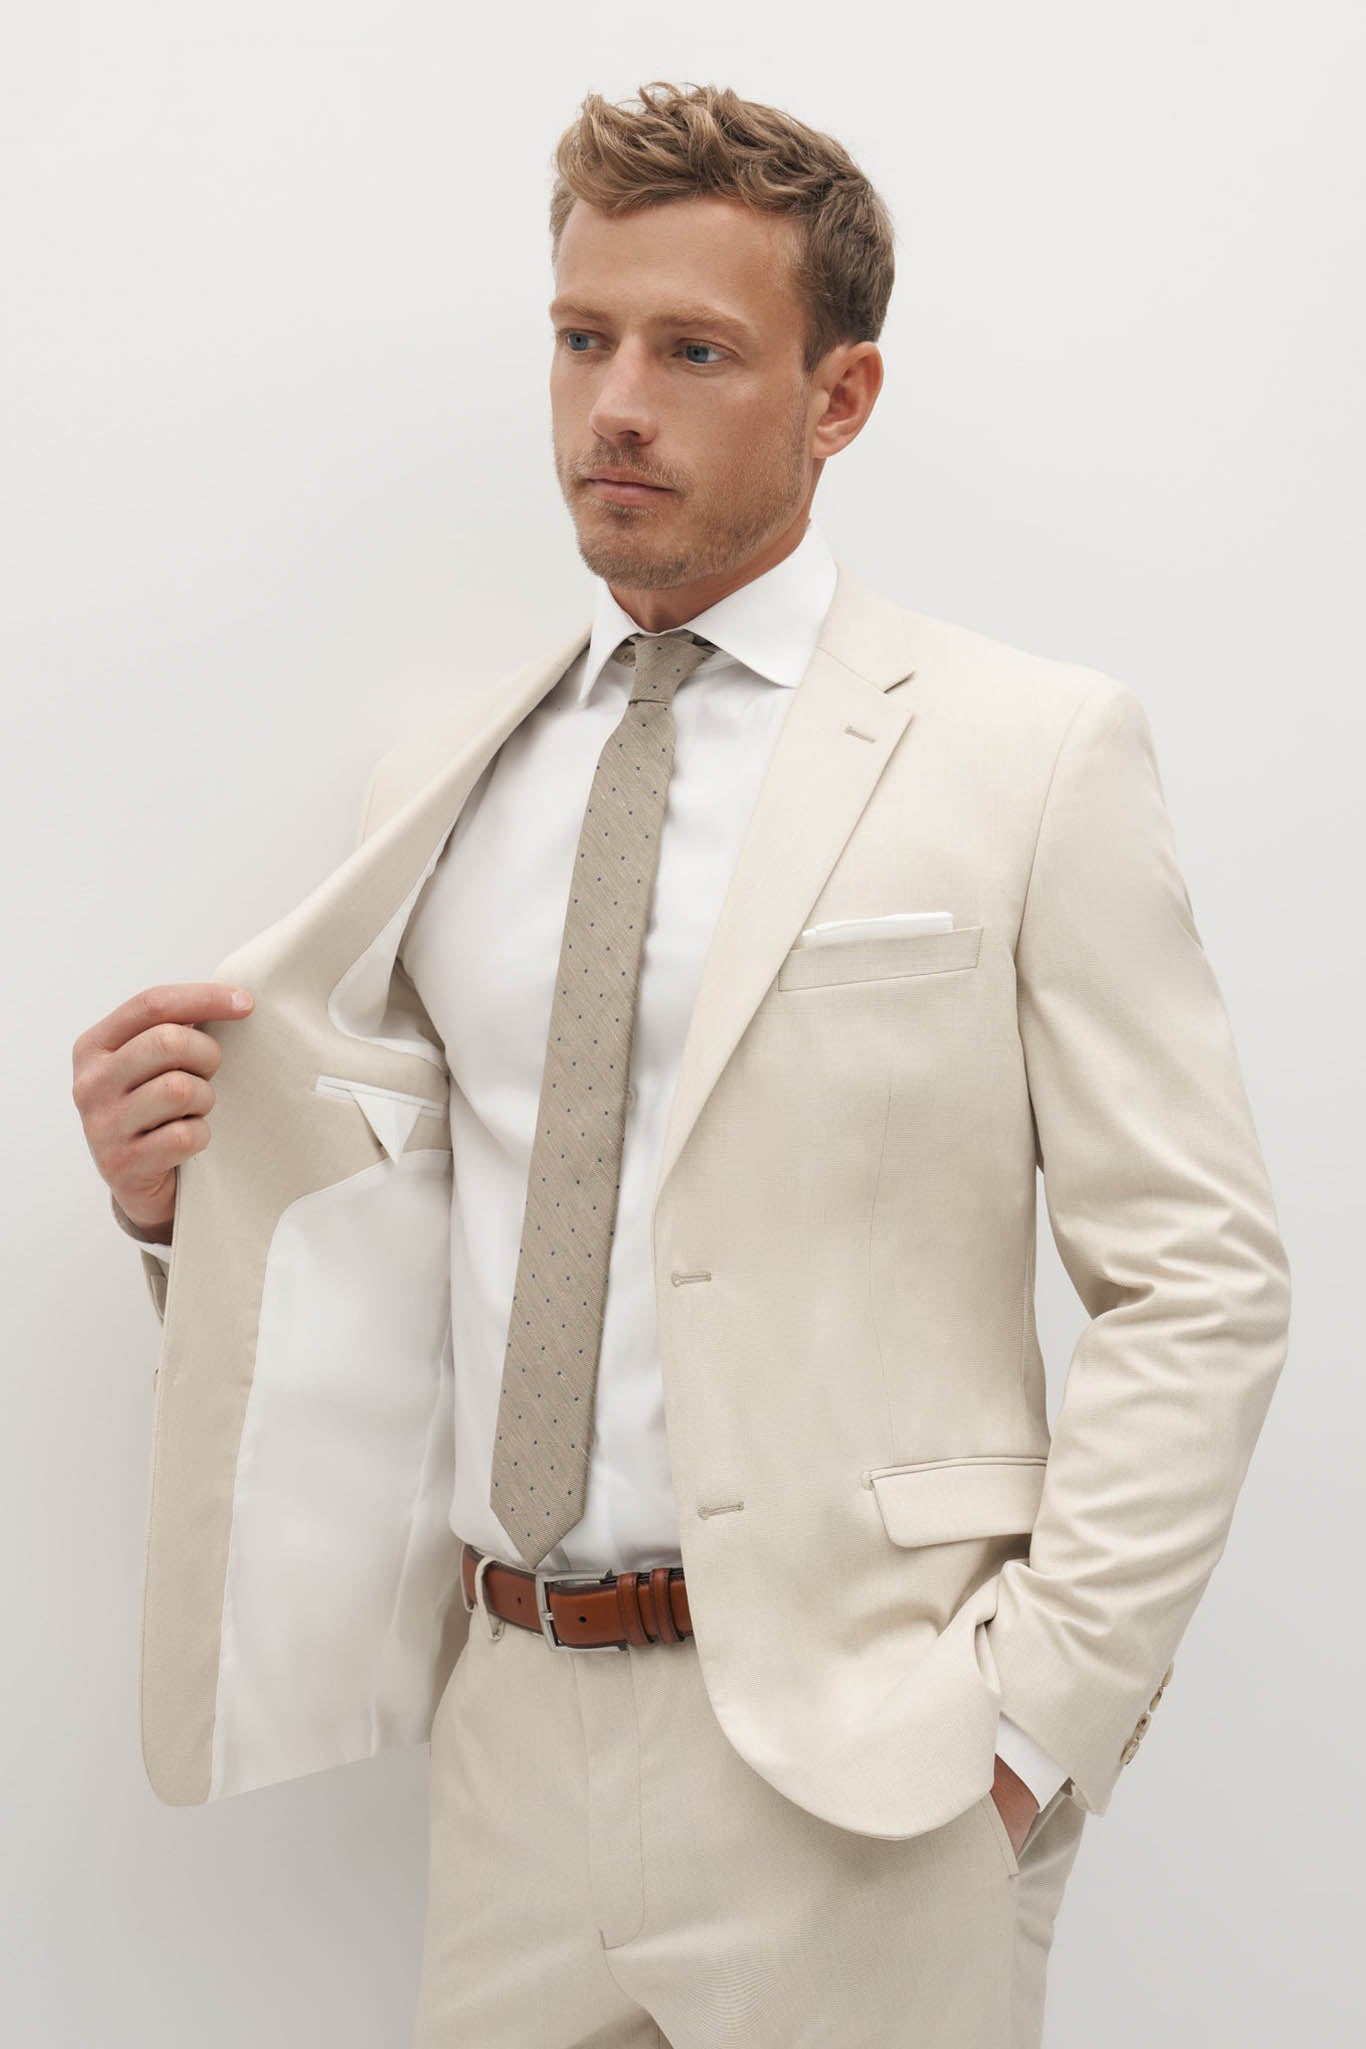 Buy P&L Men's Premium Wool Blend Business Blazer Dress Suit Jacket, Black,  36 Short at Amazon.in